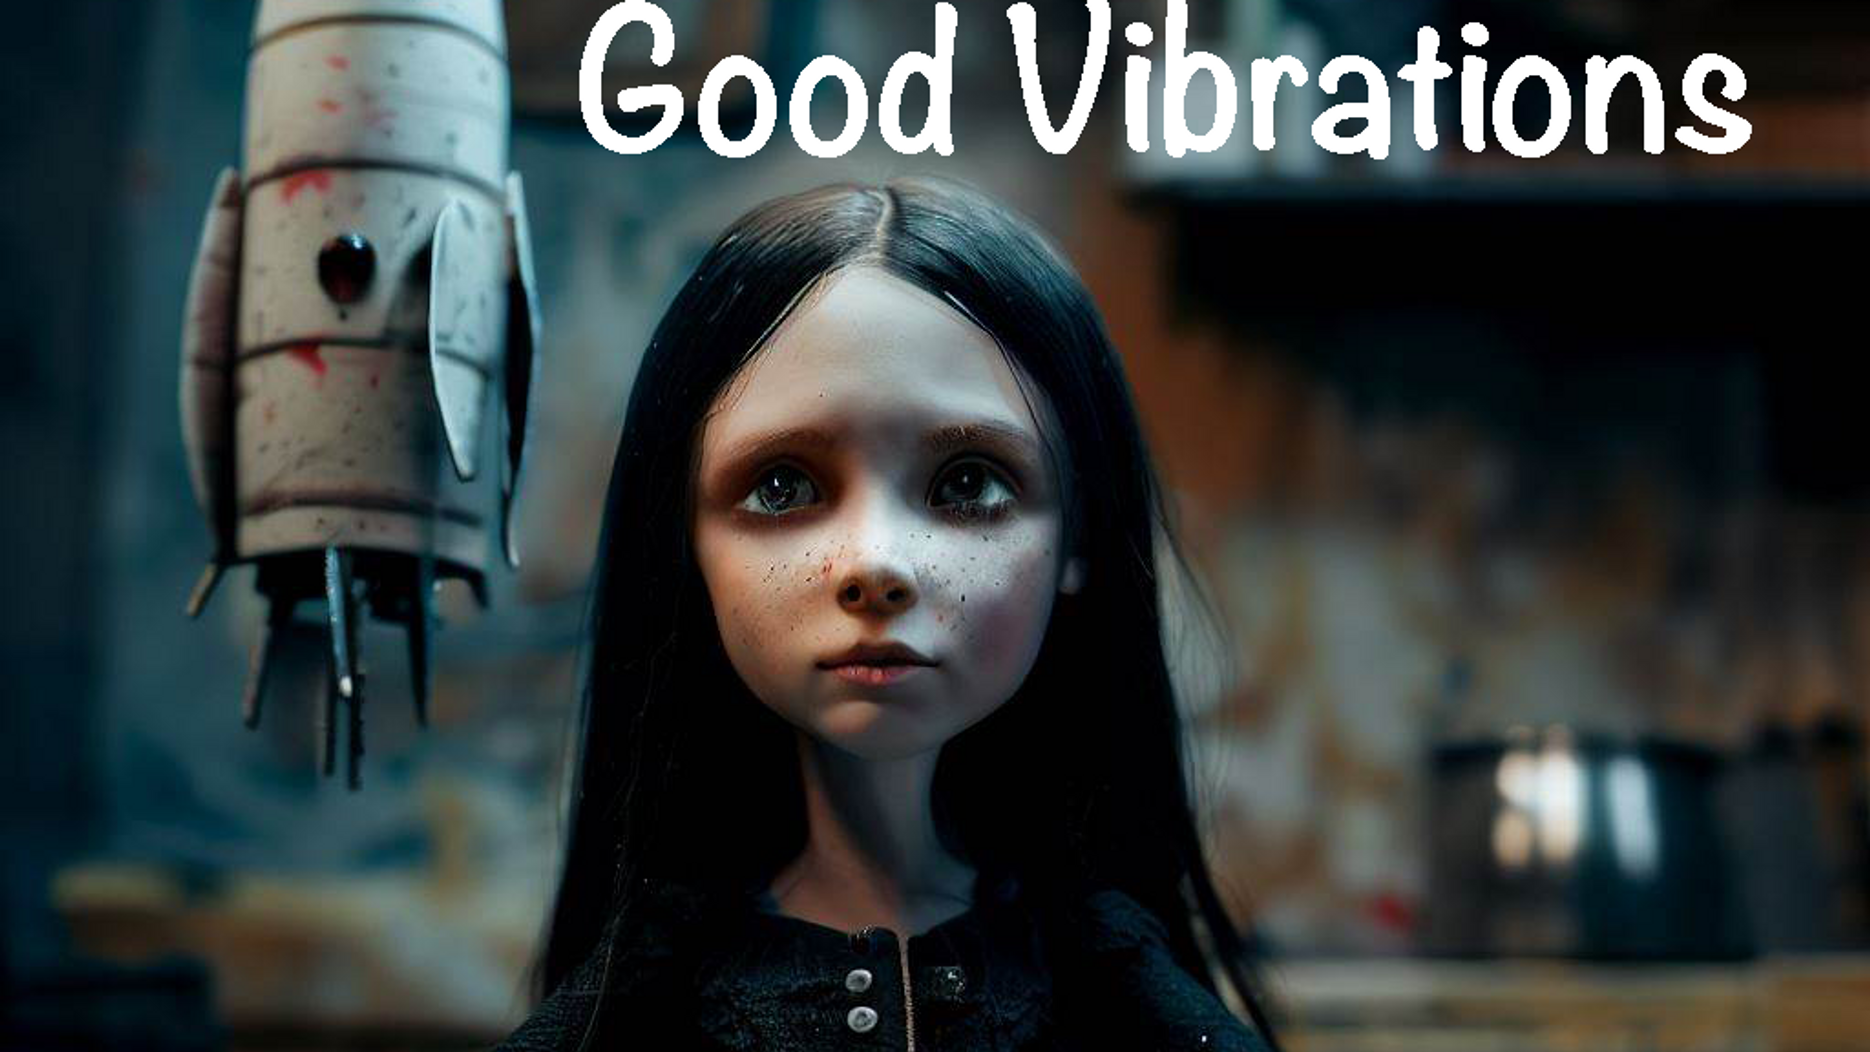 Good Vibrations - Moodboard